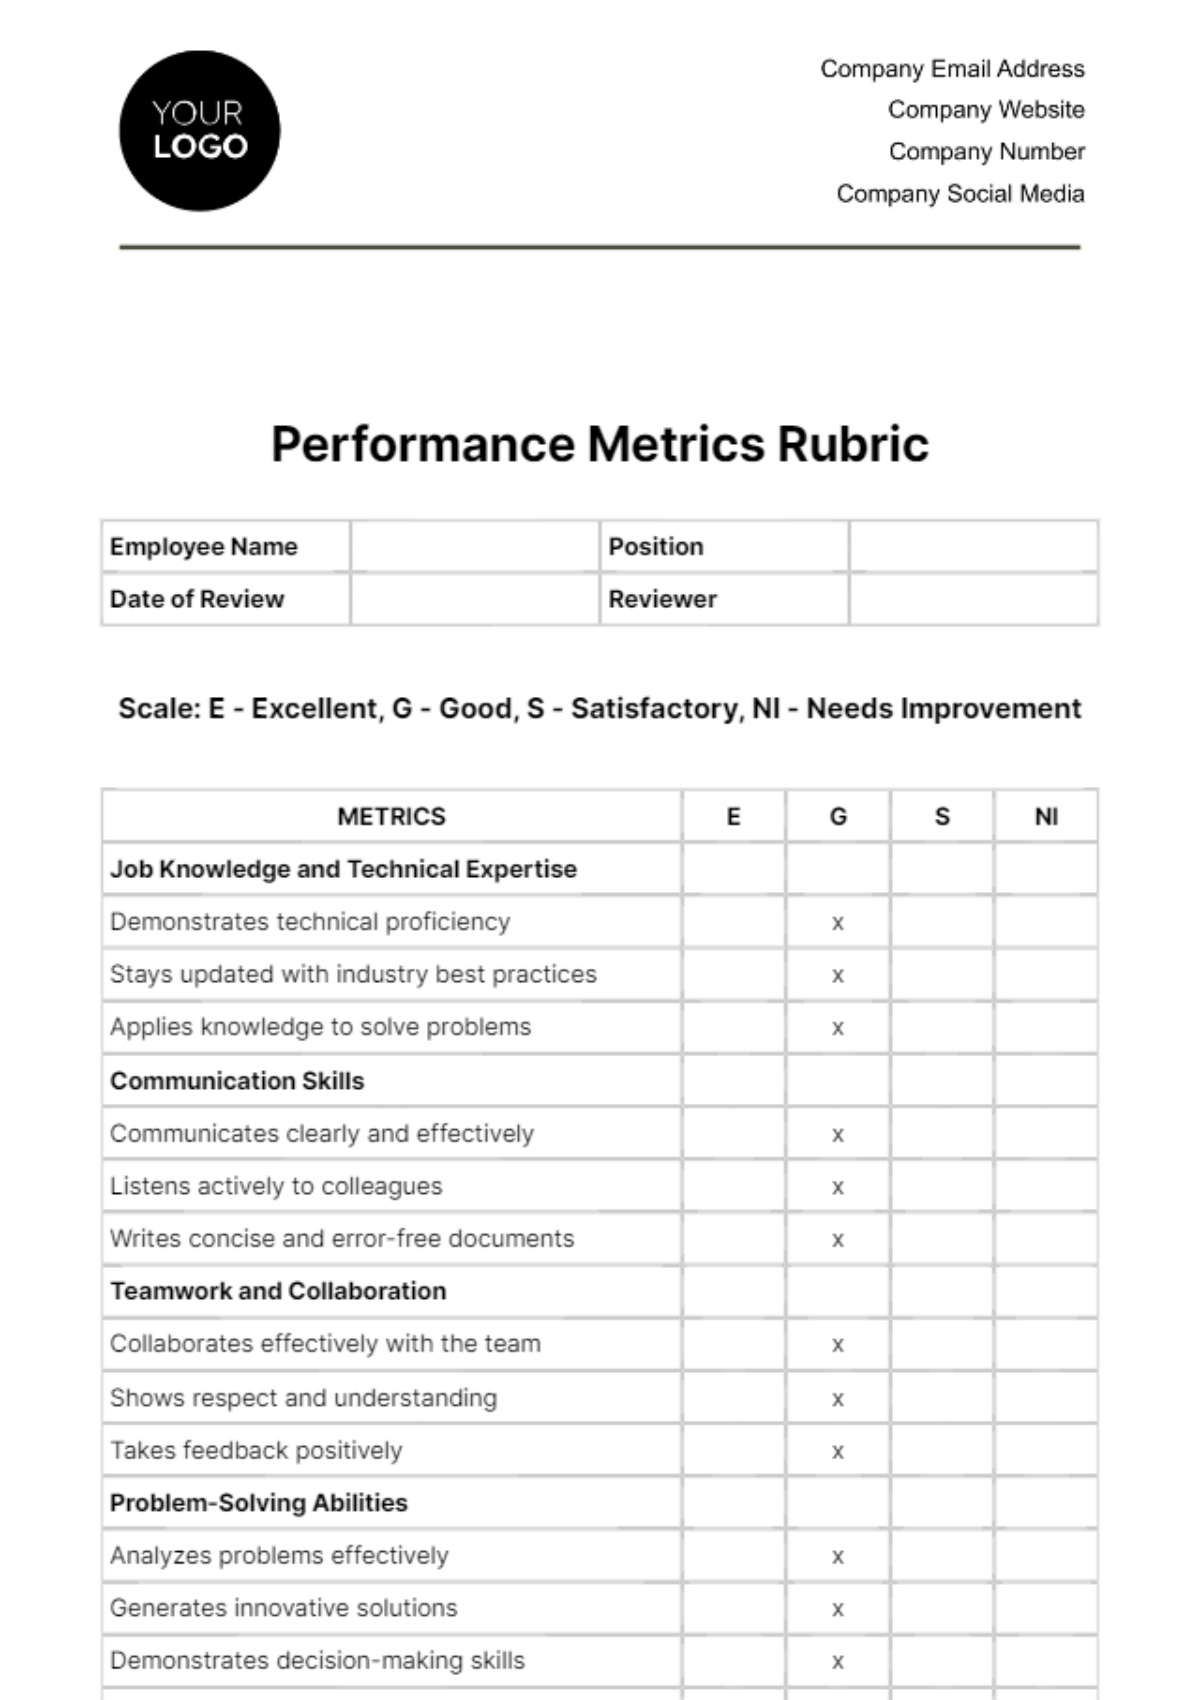 Performance Metrics Rubric HR Template